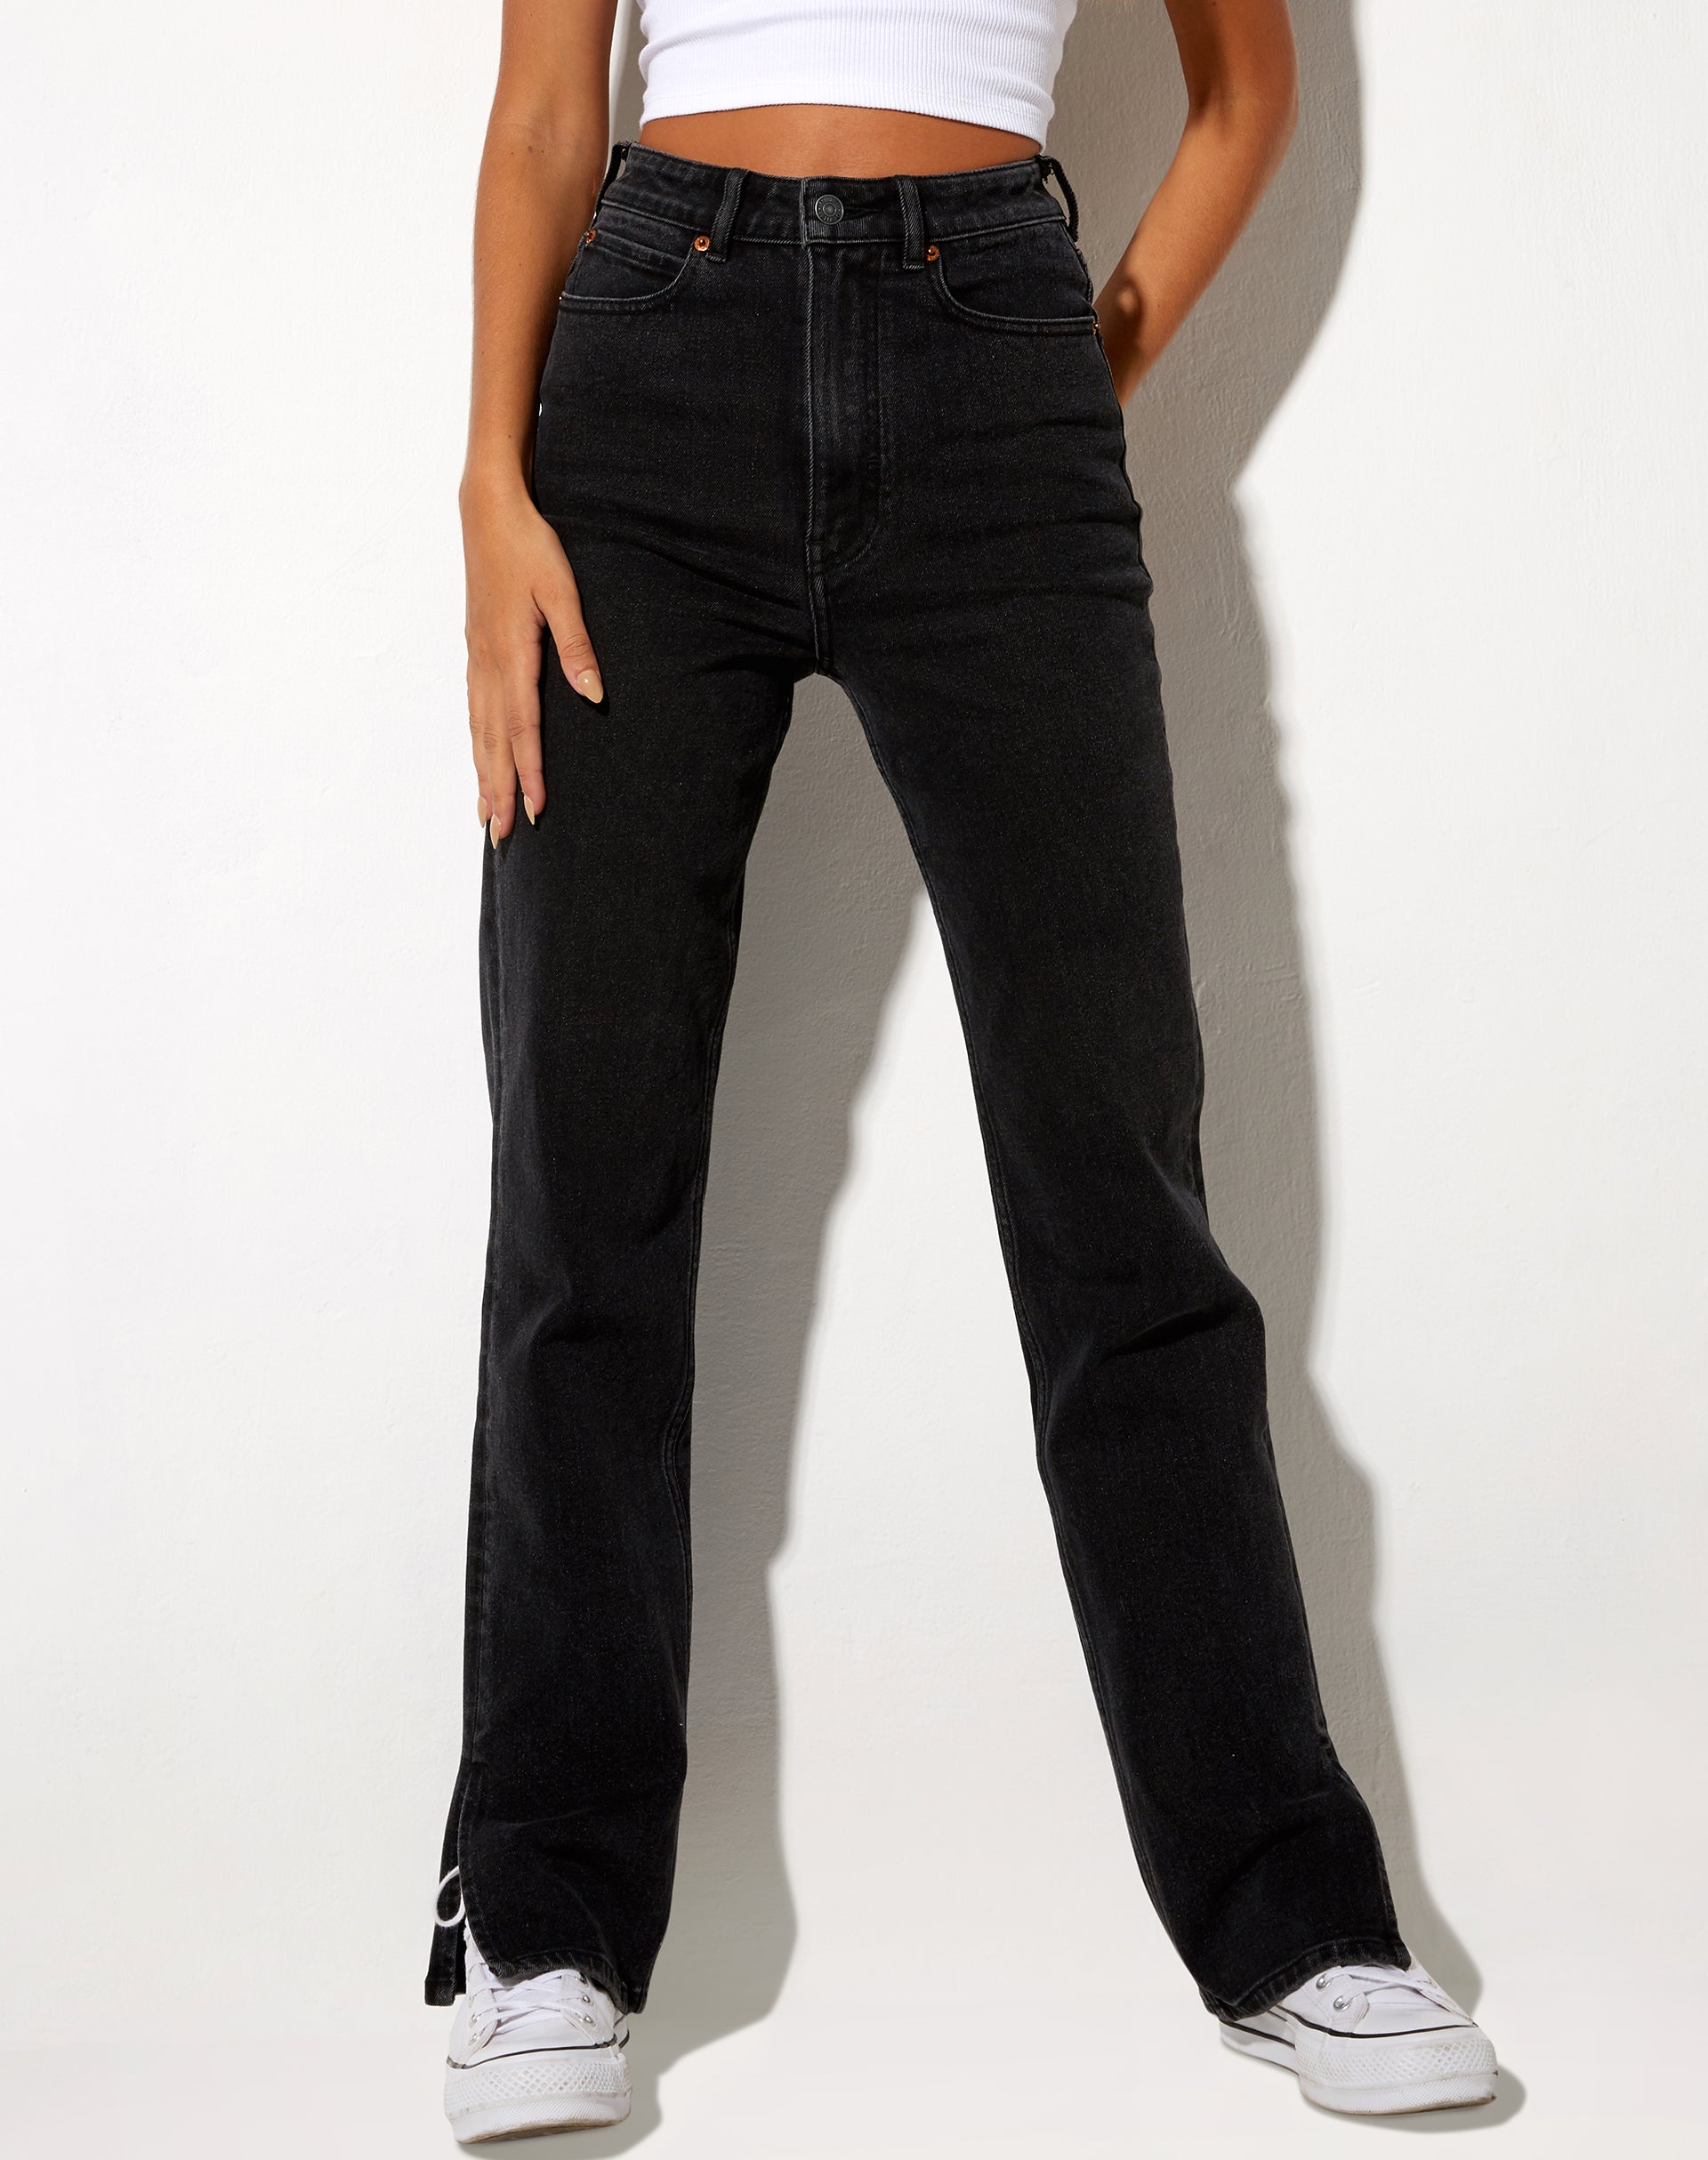 Black Wide Leg Jeans Online Discounted, Save 67% | jlcatj.gob.mx